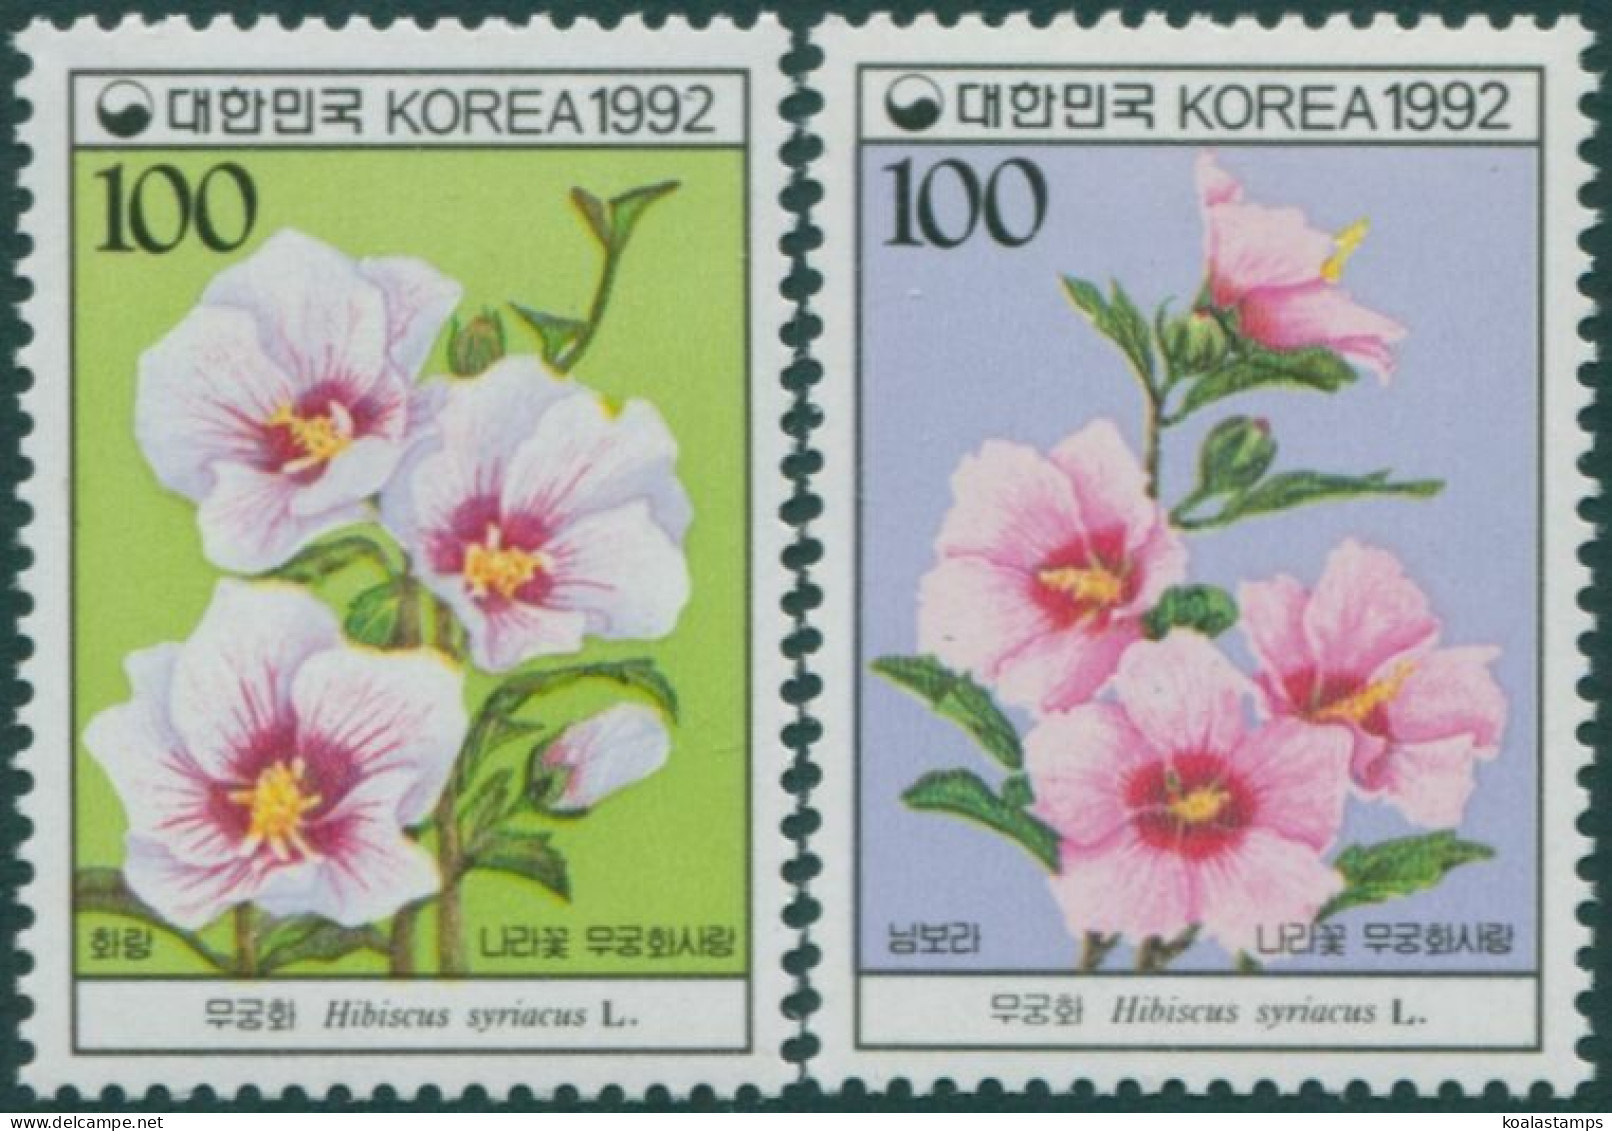 Korea South 1992 SG1985-1986 Hibiscus Flowers MNH - Korea, South